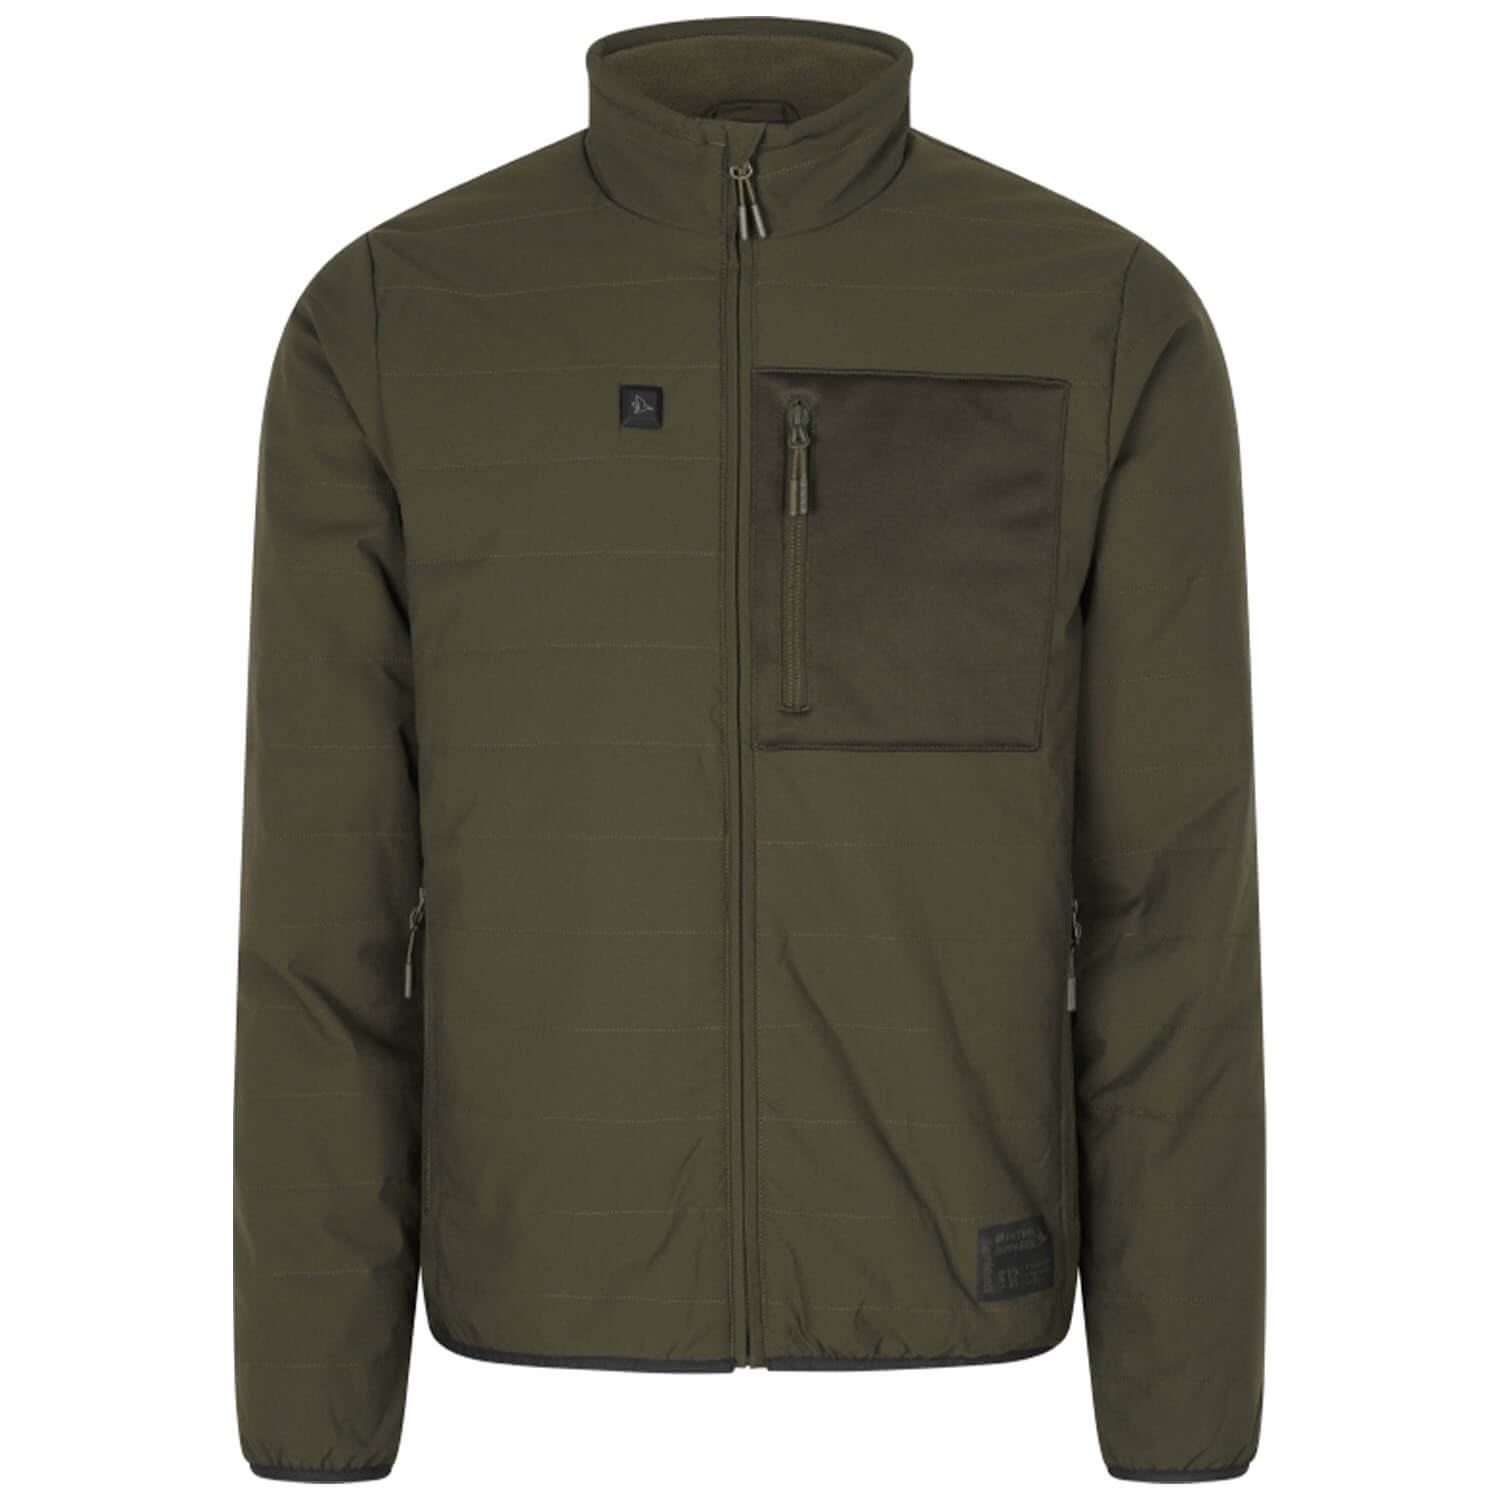 Seeland heat jacket celsius (Pine Green) - Winter Hunting Clothing